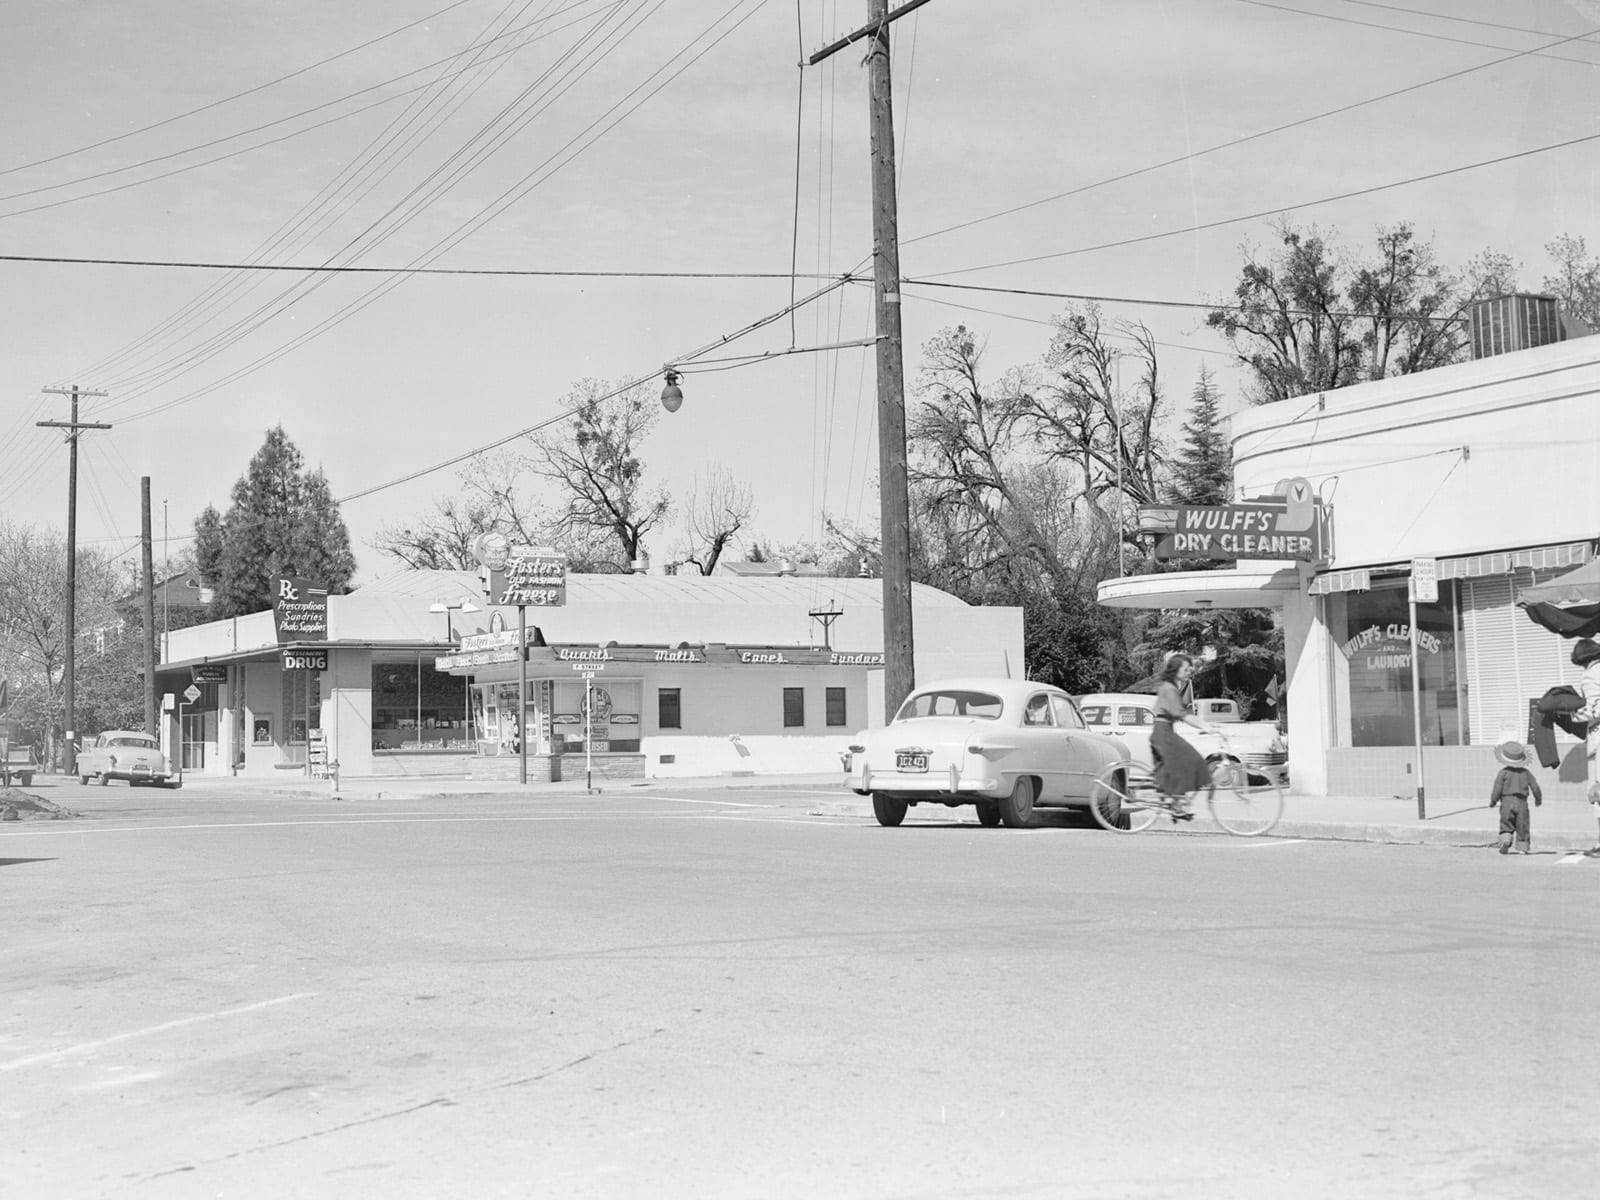 Second Street at F Street, looking northwest, 1951